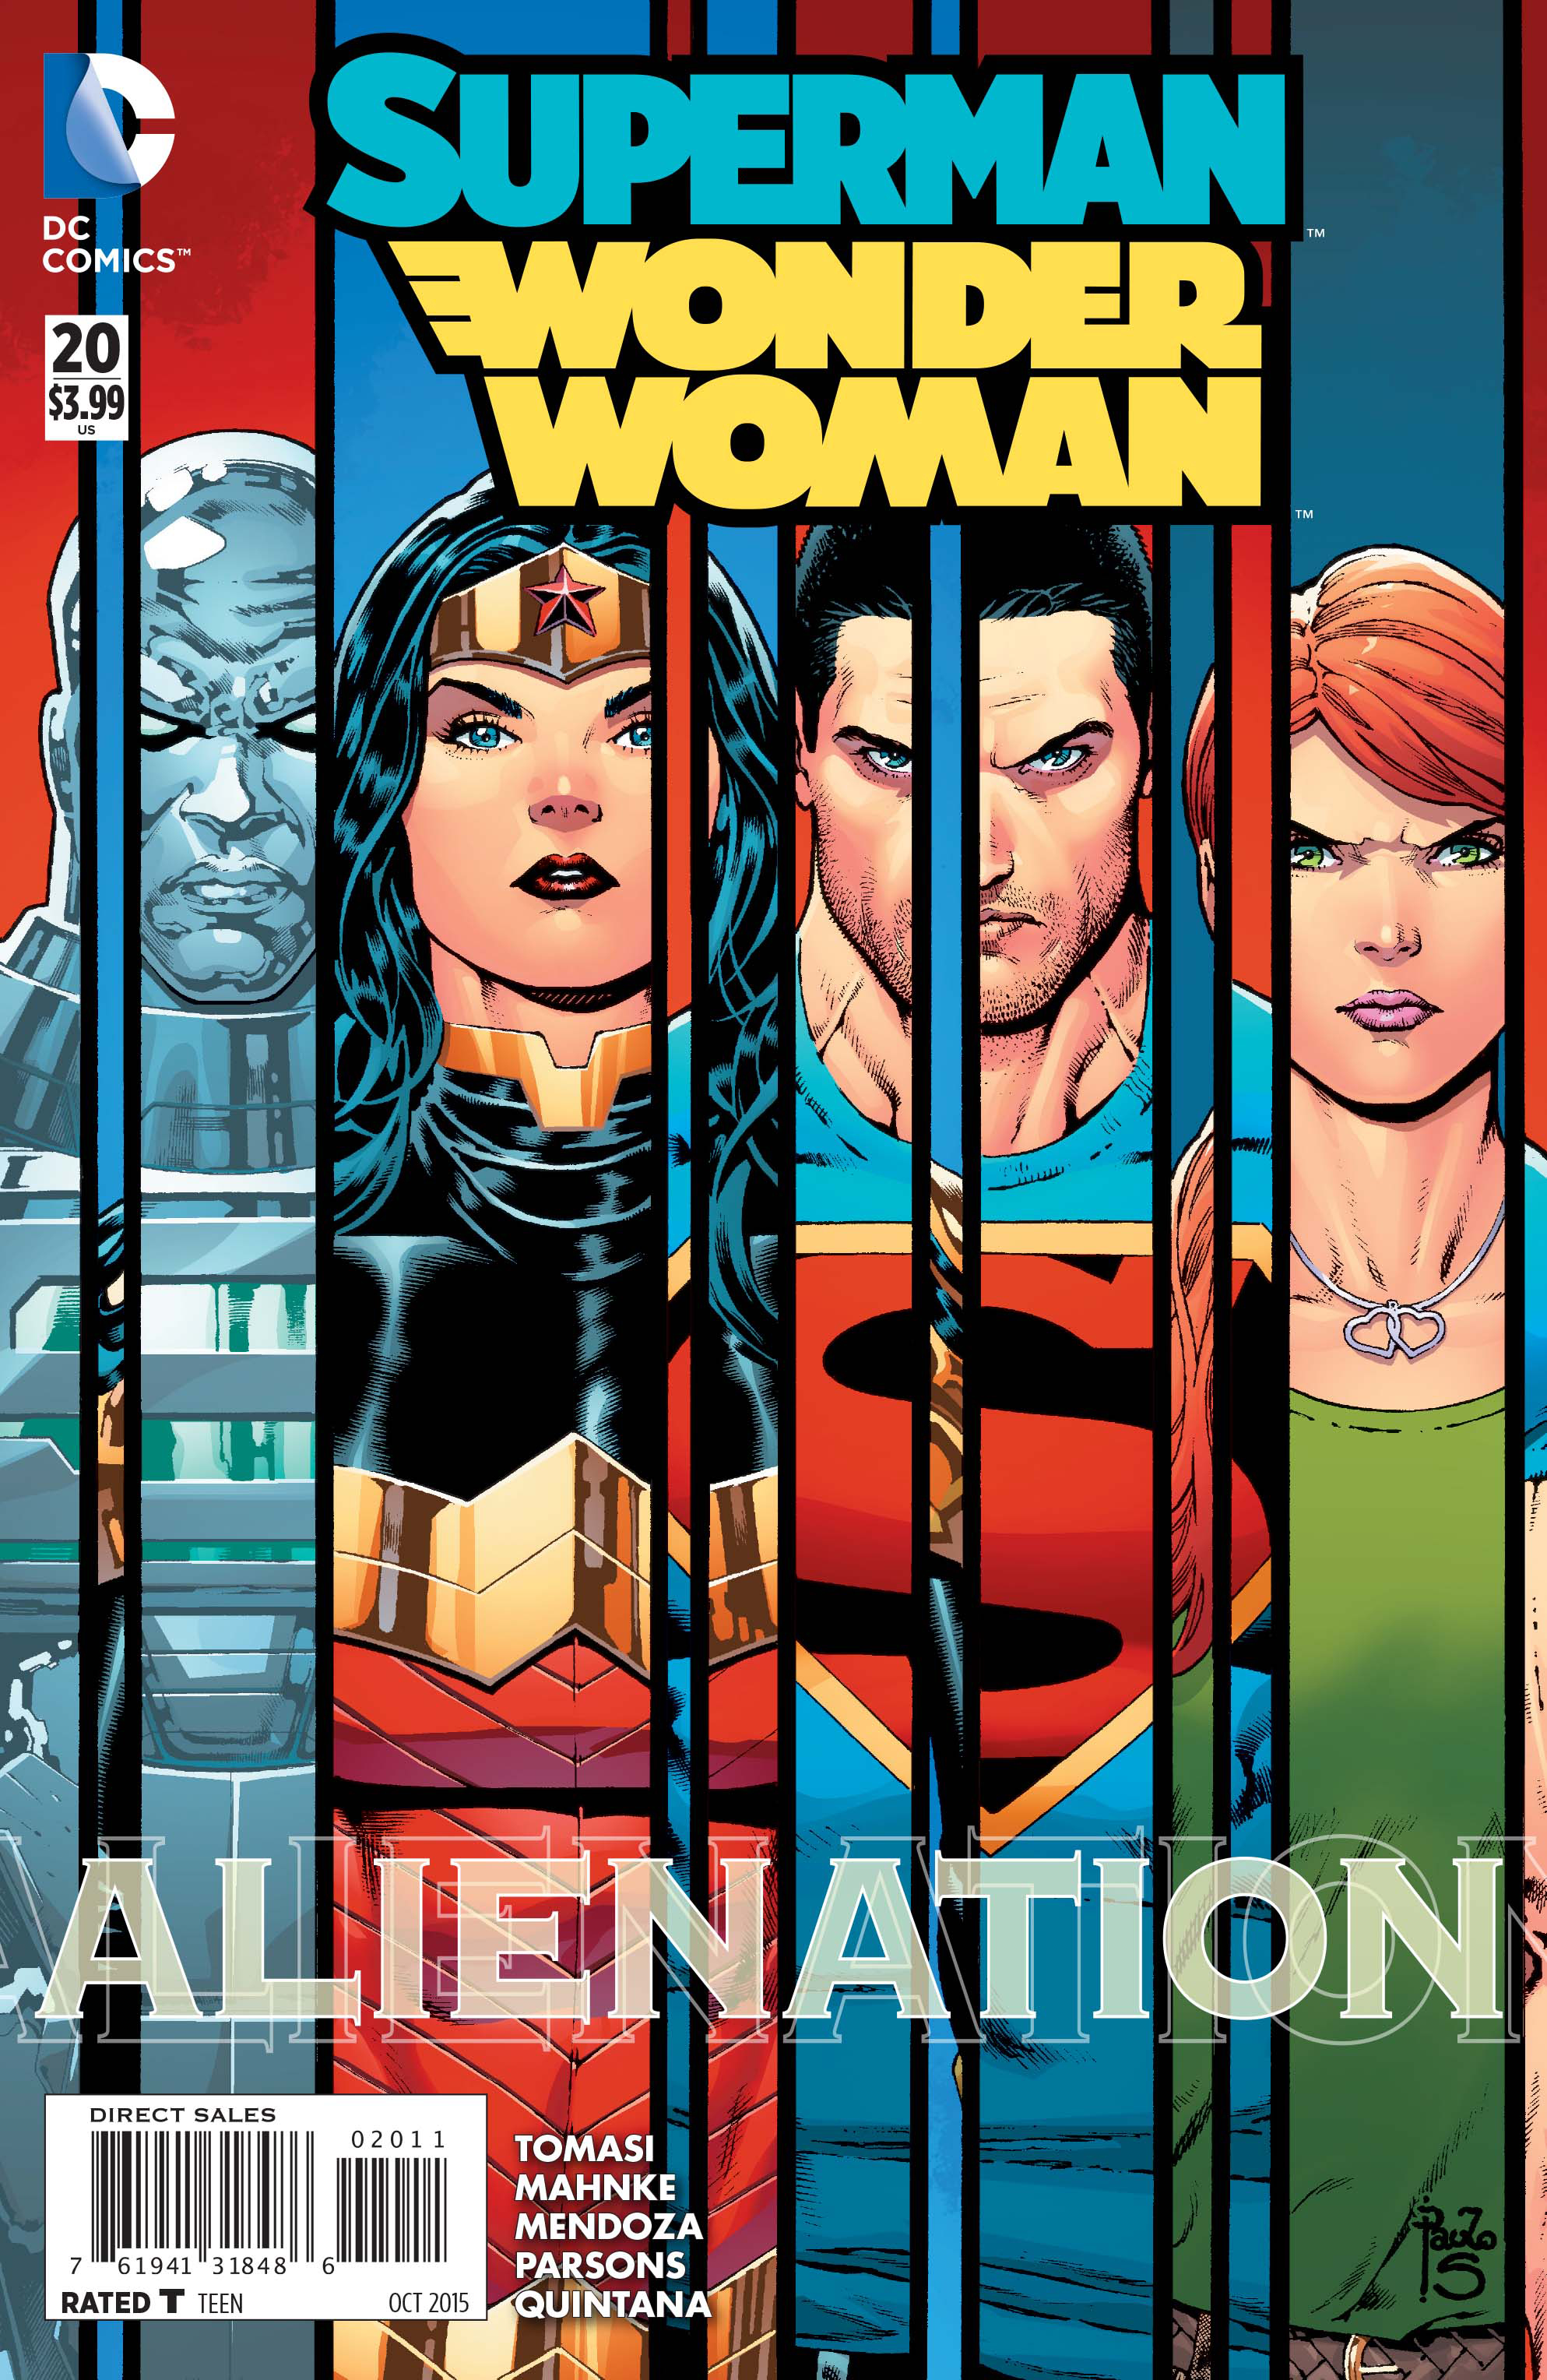 SUPERMAN WONDER WOMAN #20